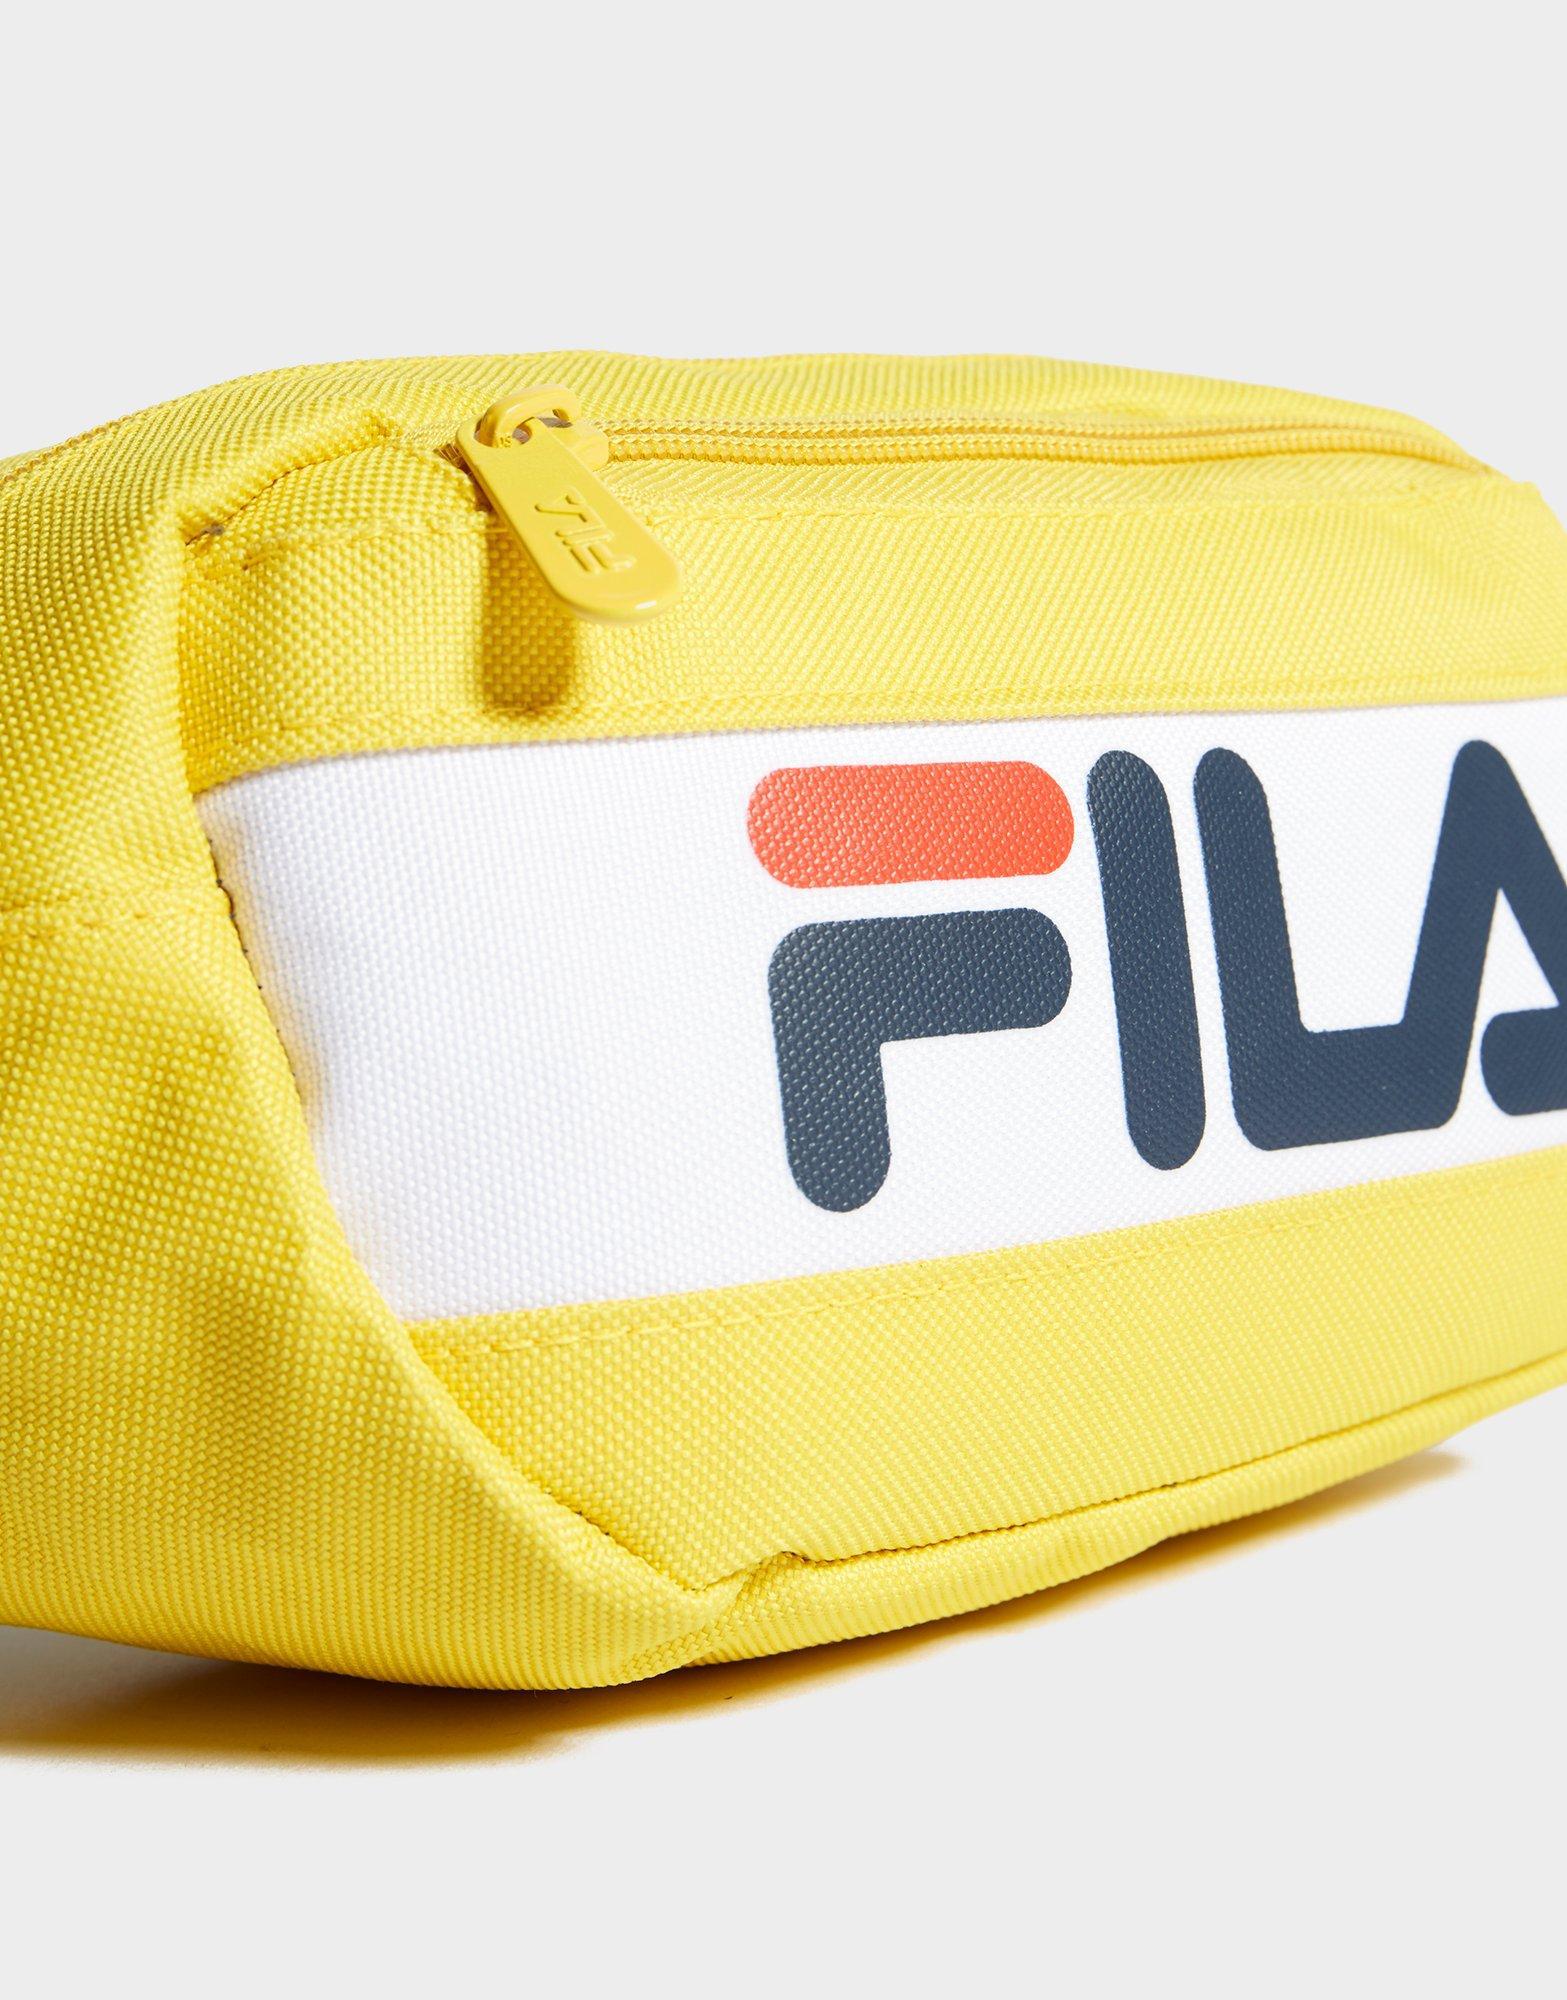 fila yellow fanny pack